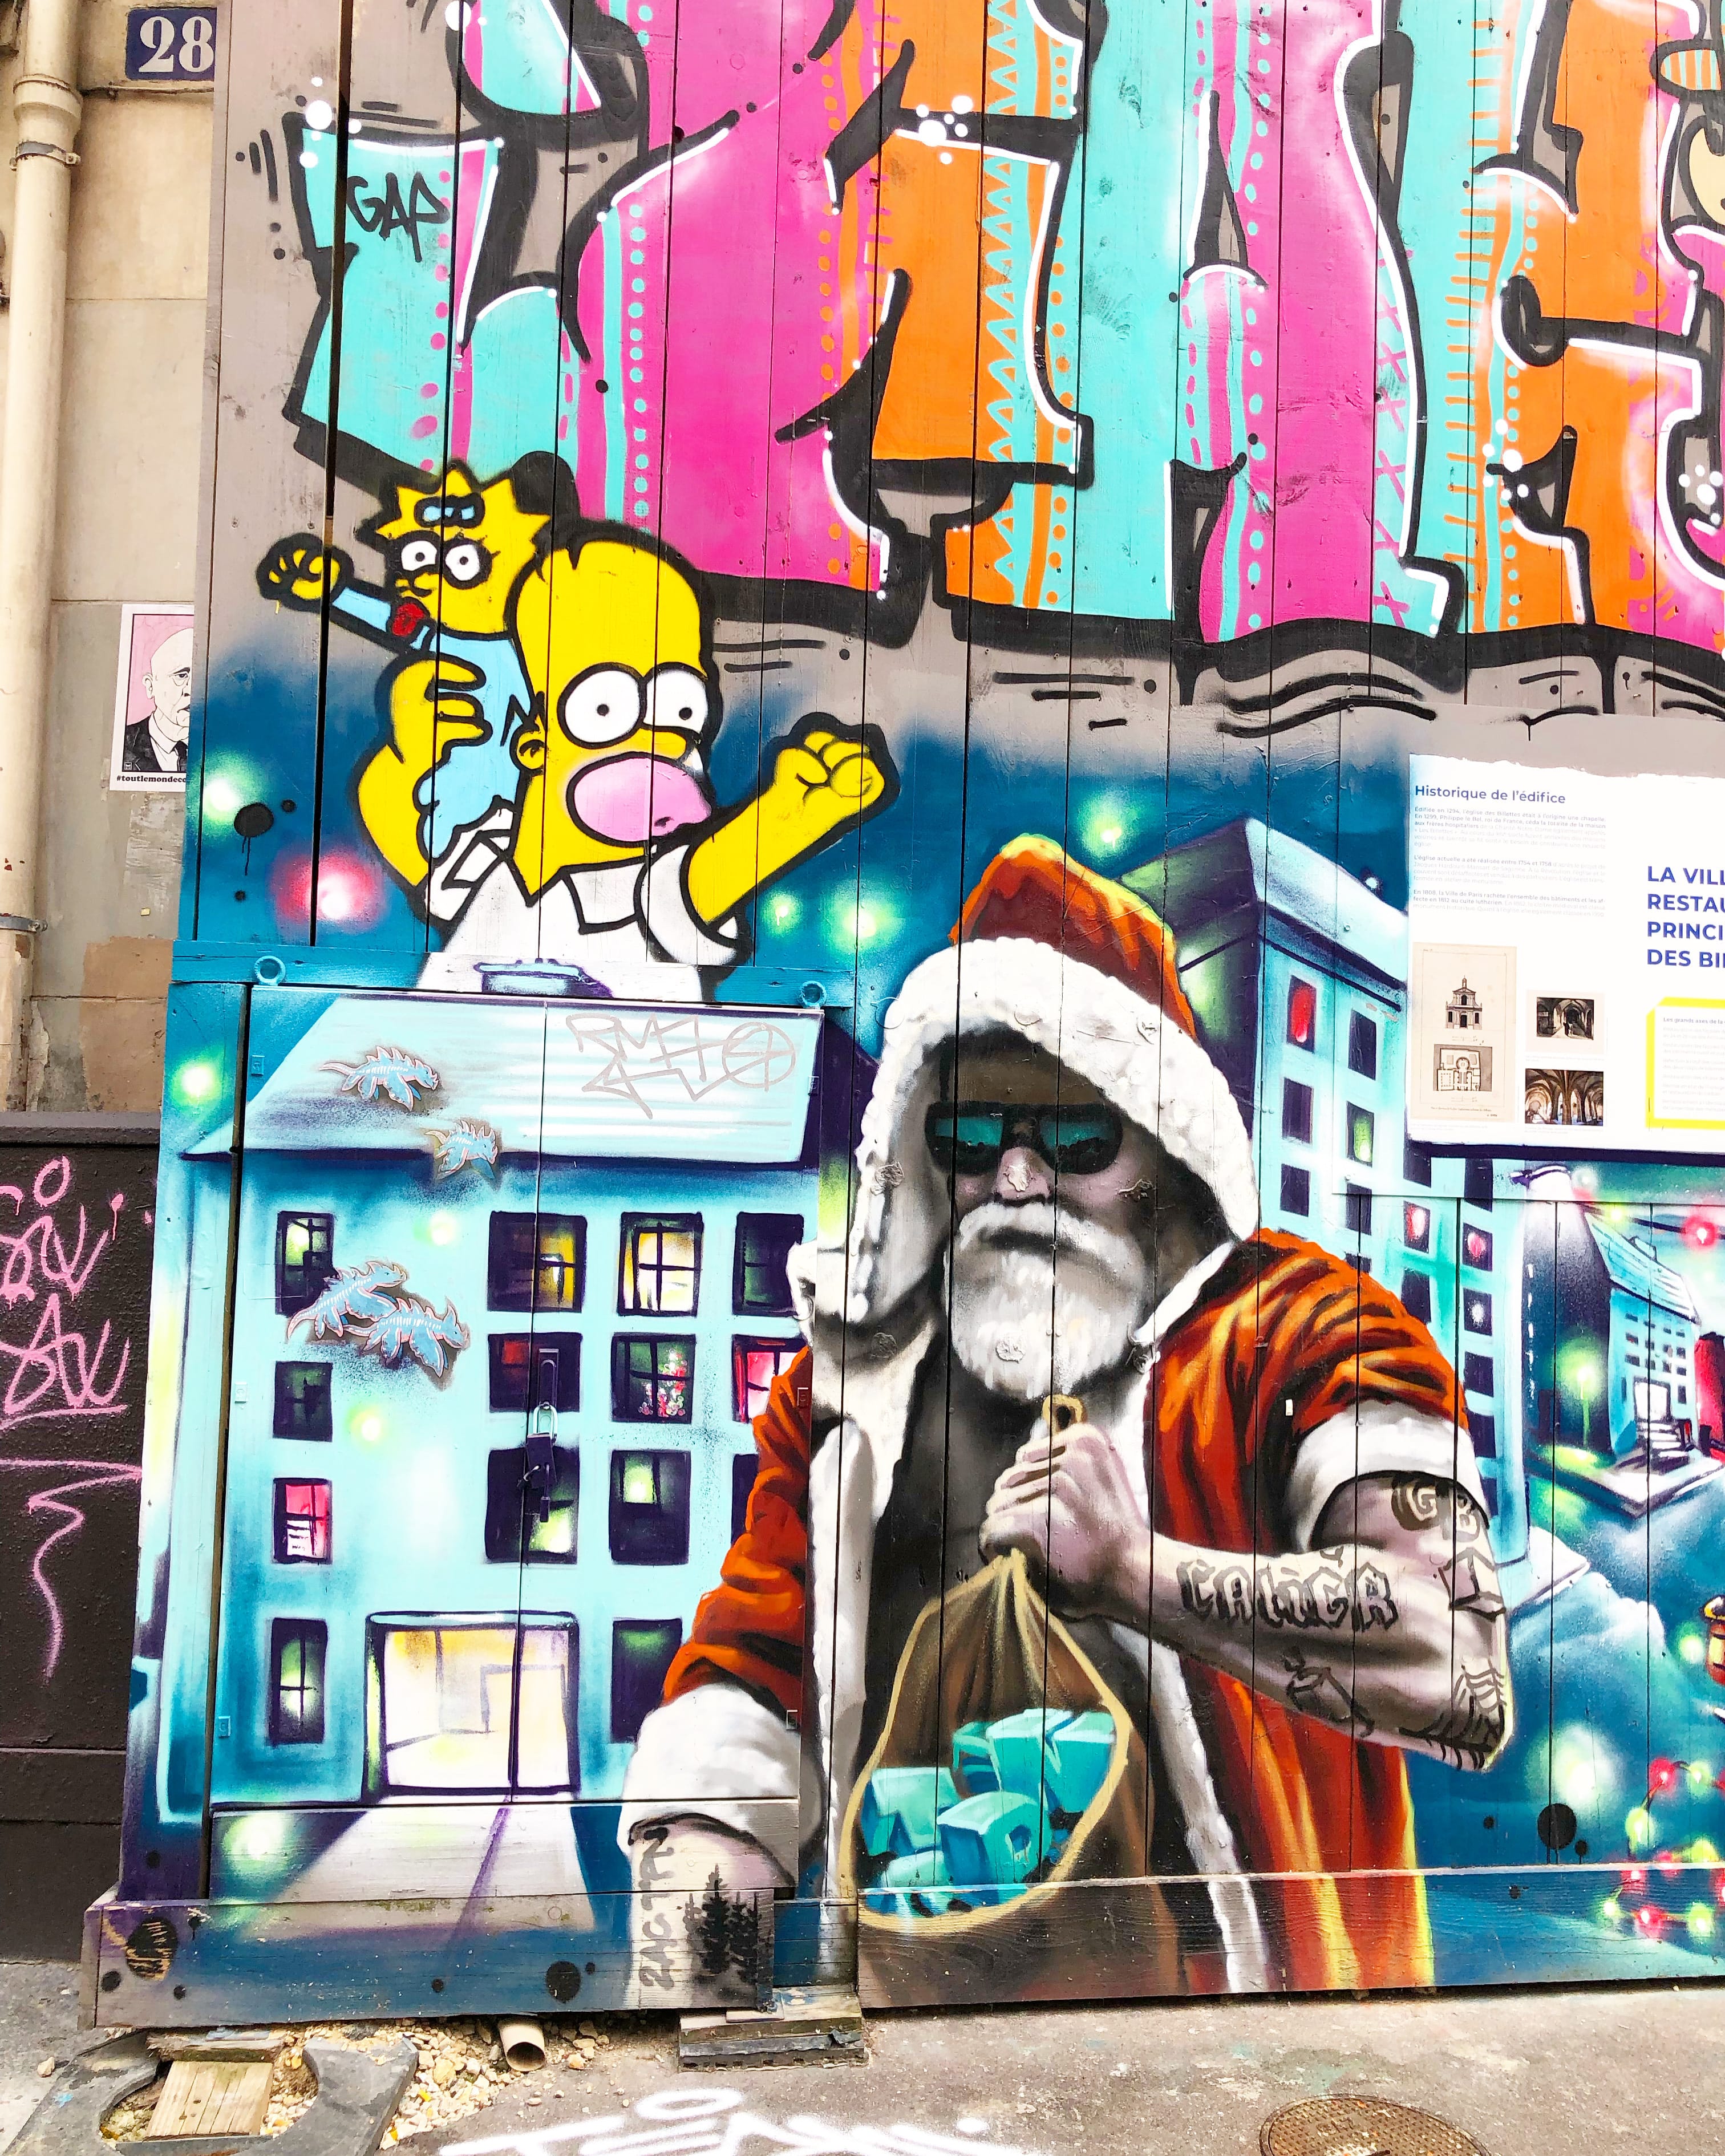 Graffiti 5587 Graff in Paris France